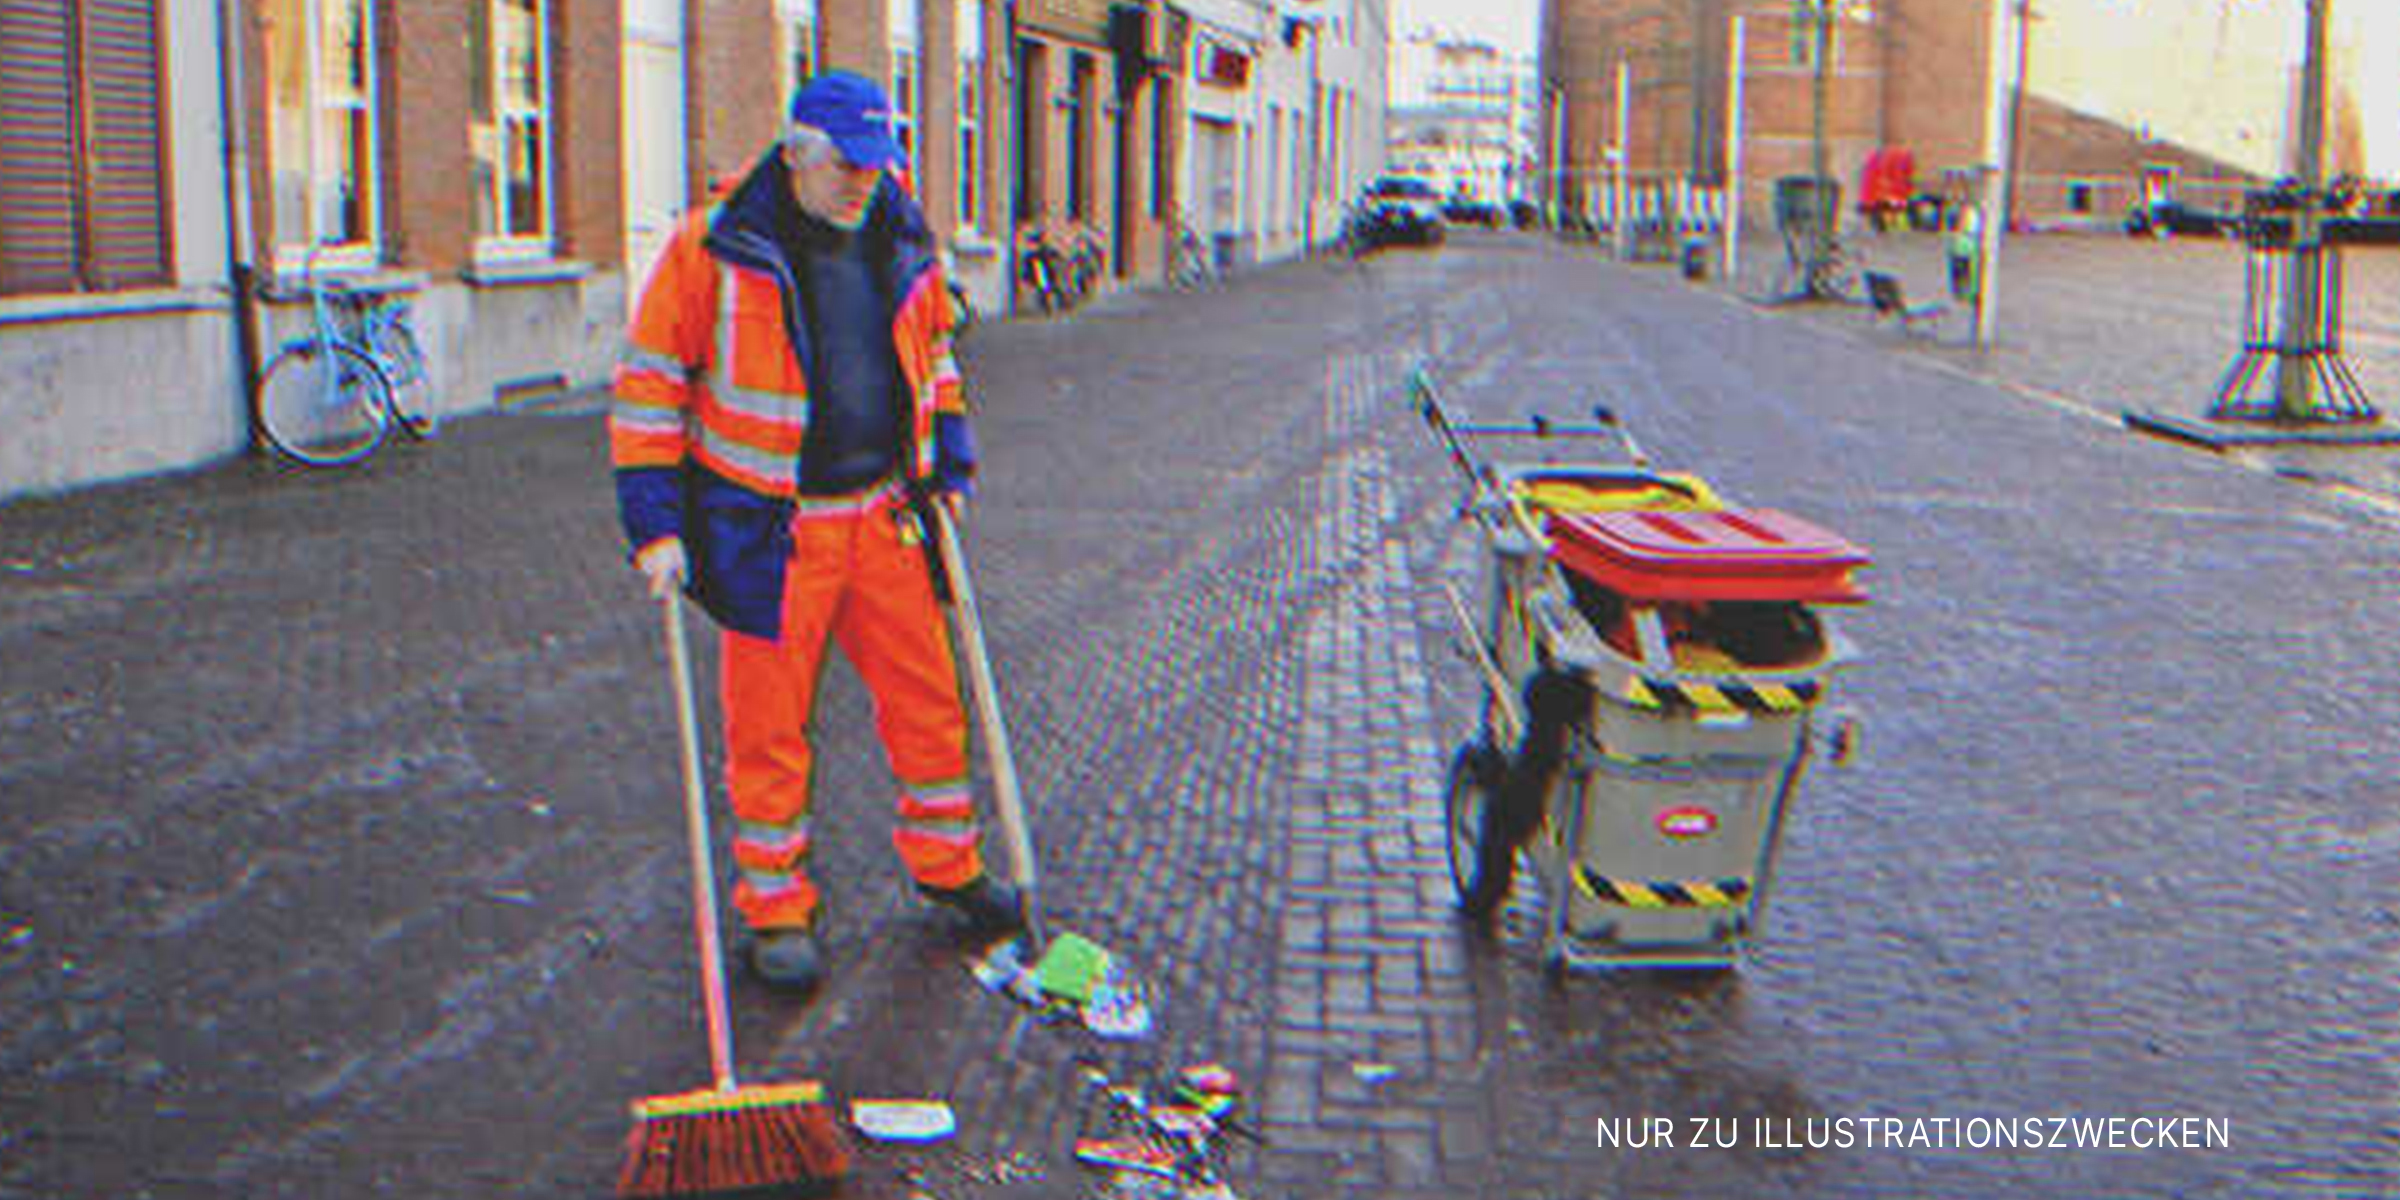 Der Müllmann. | Quelle: Flickr / My name's axel (CC BY-SA 2.0)